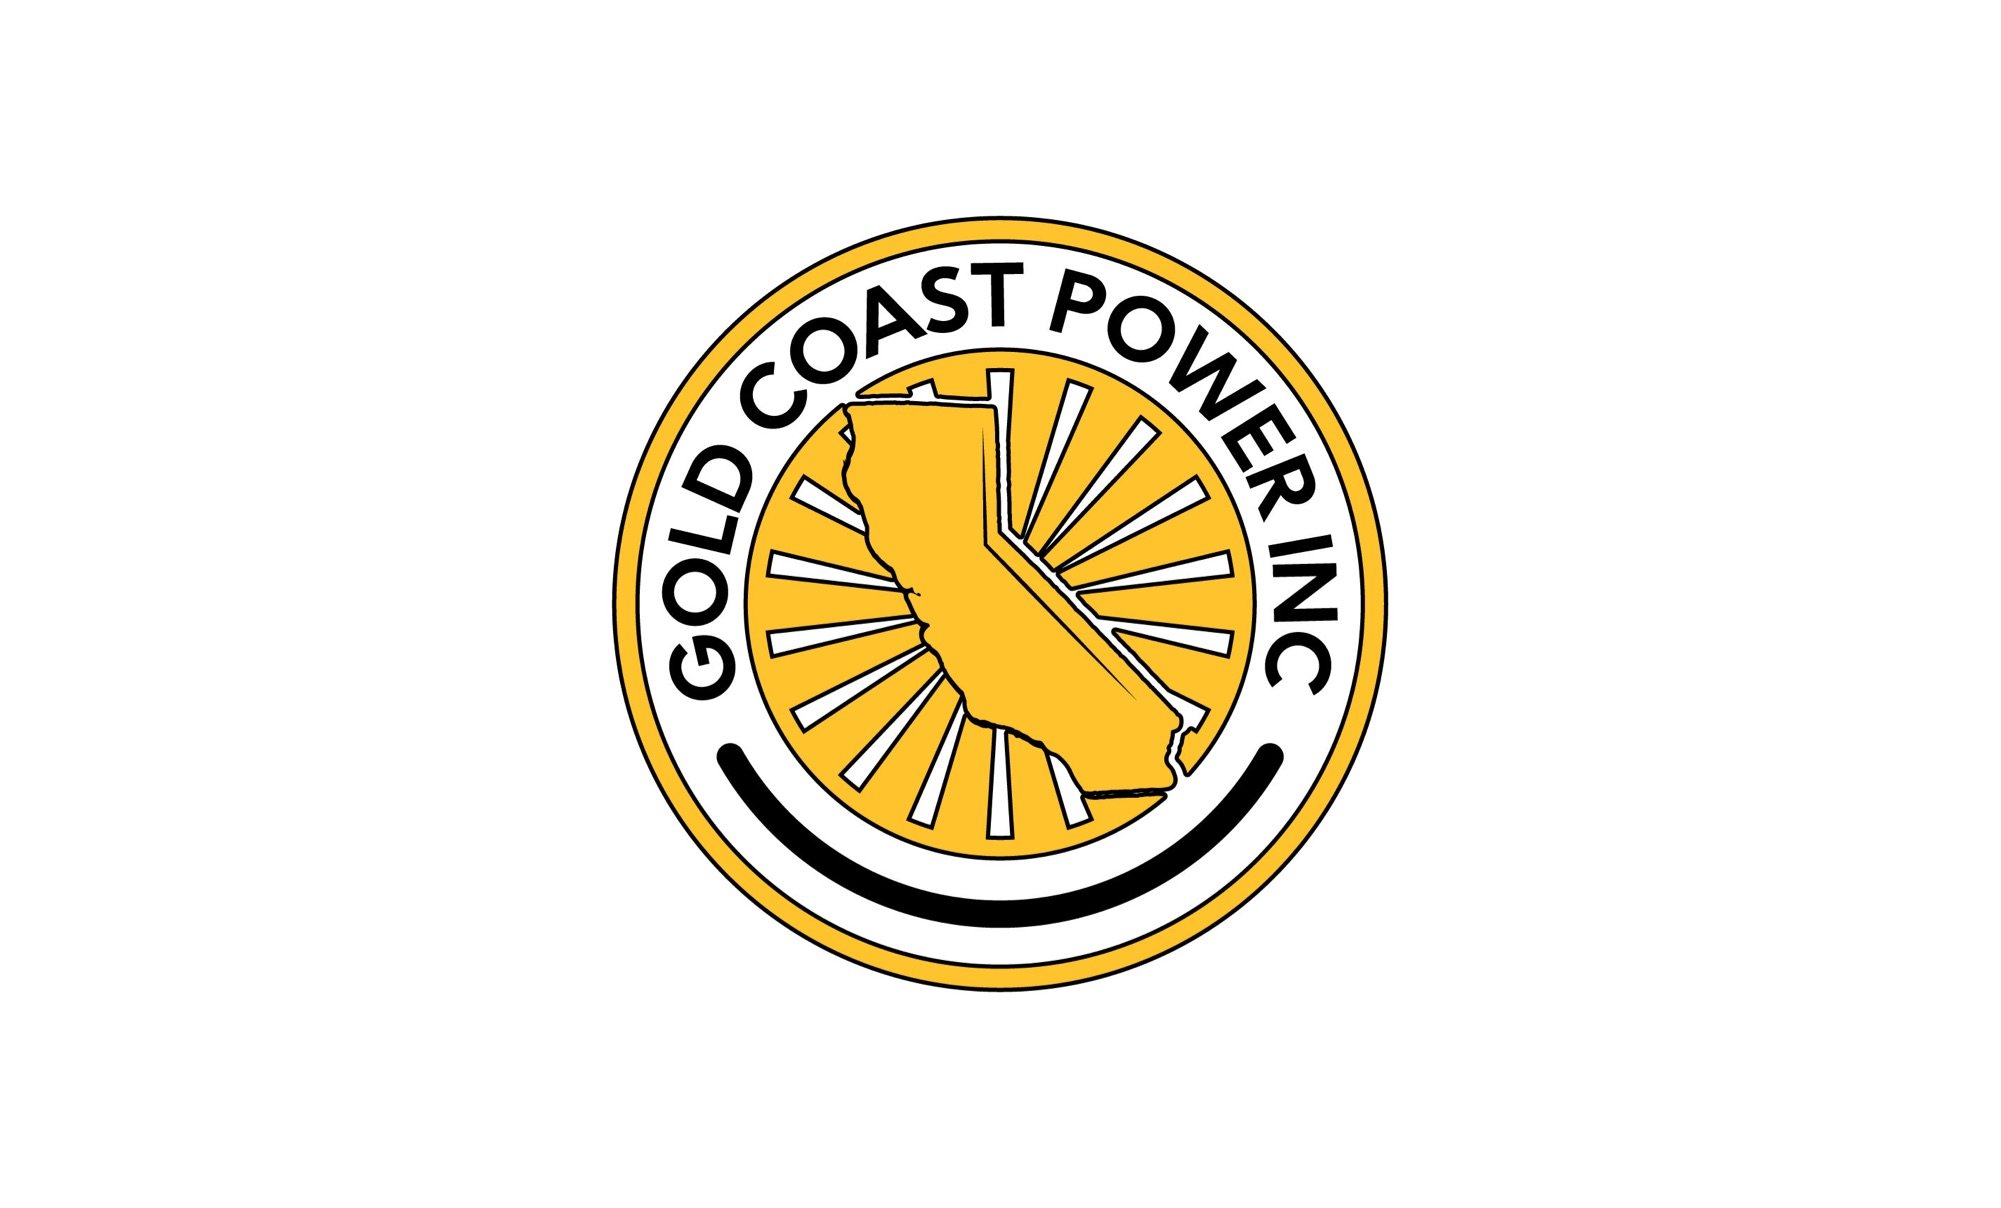 Gold Coast Power Inc. Logo